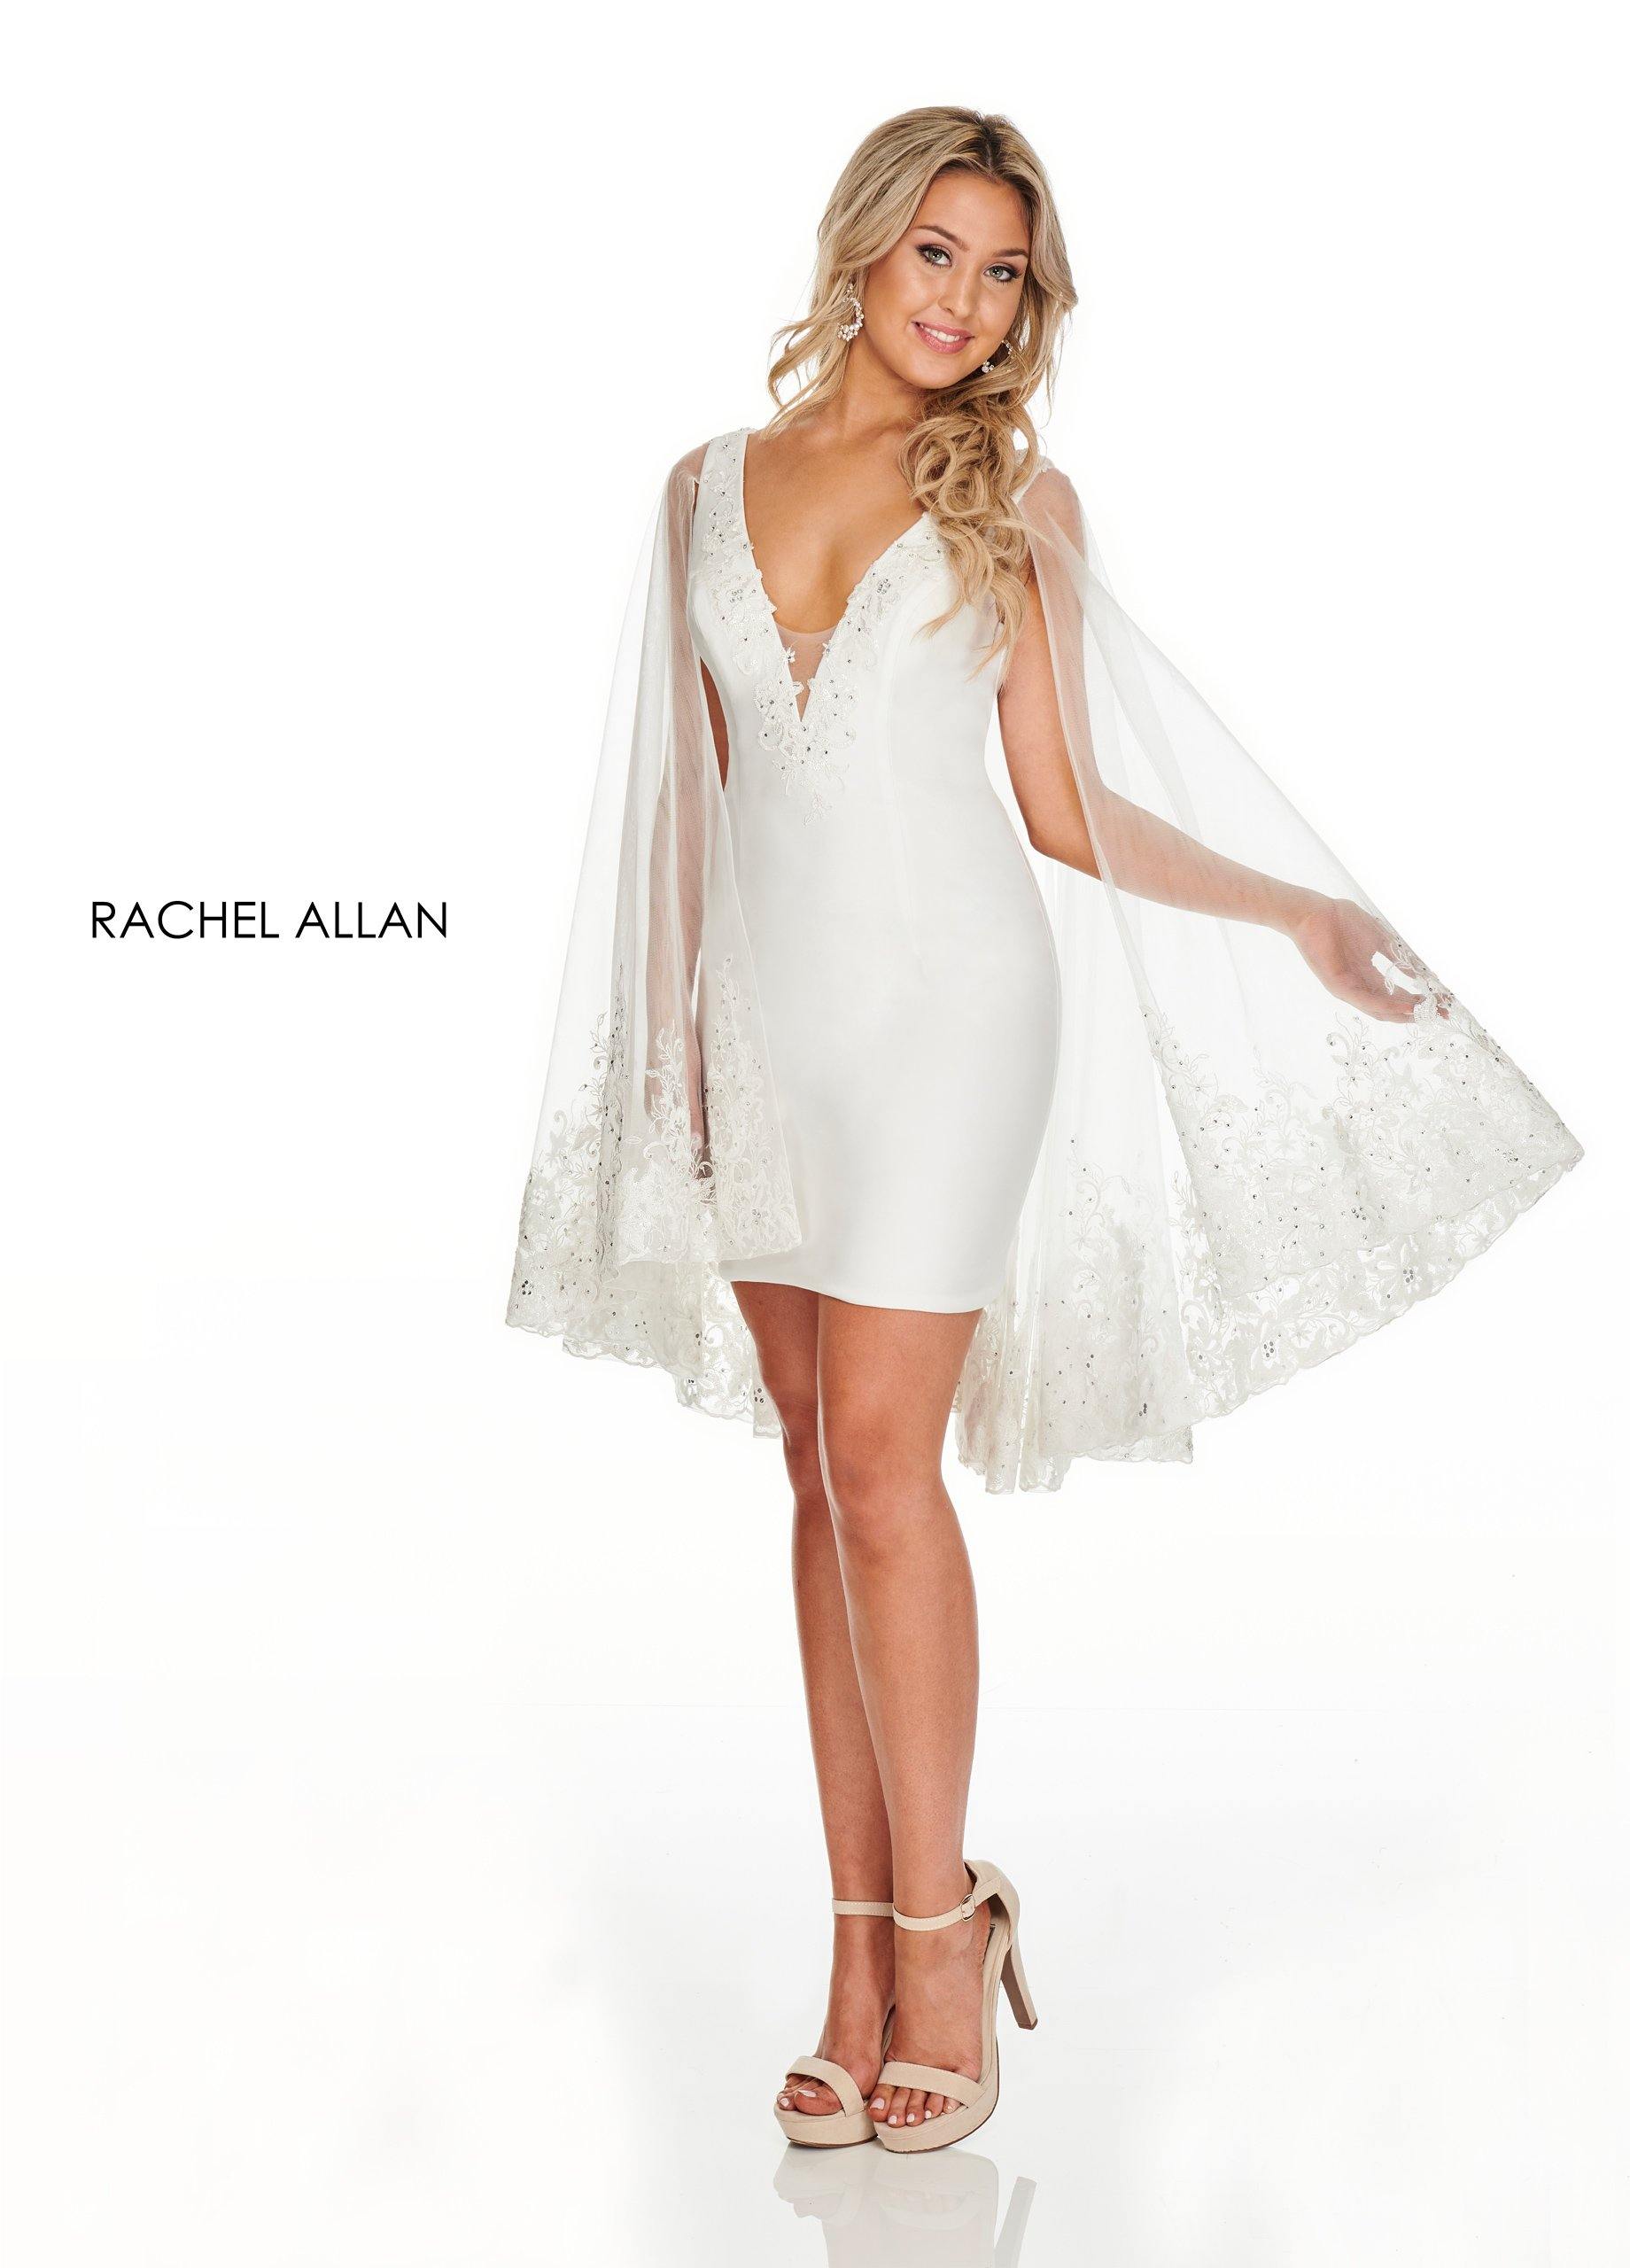 Rachel Allan Short Fitted Cocktail Dress - The Dress Outlet